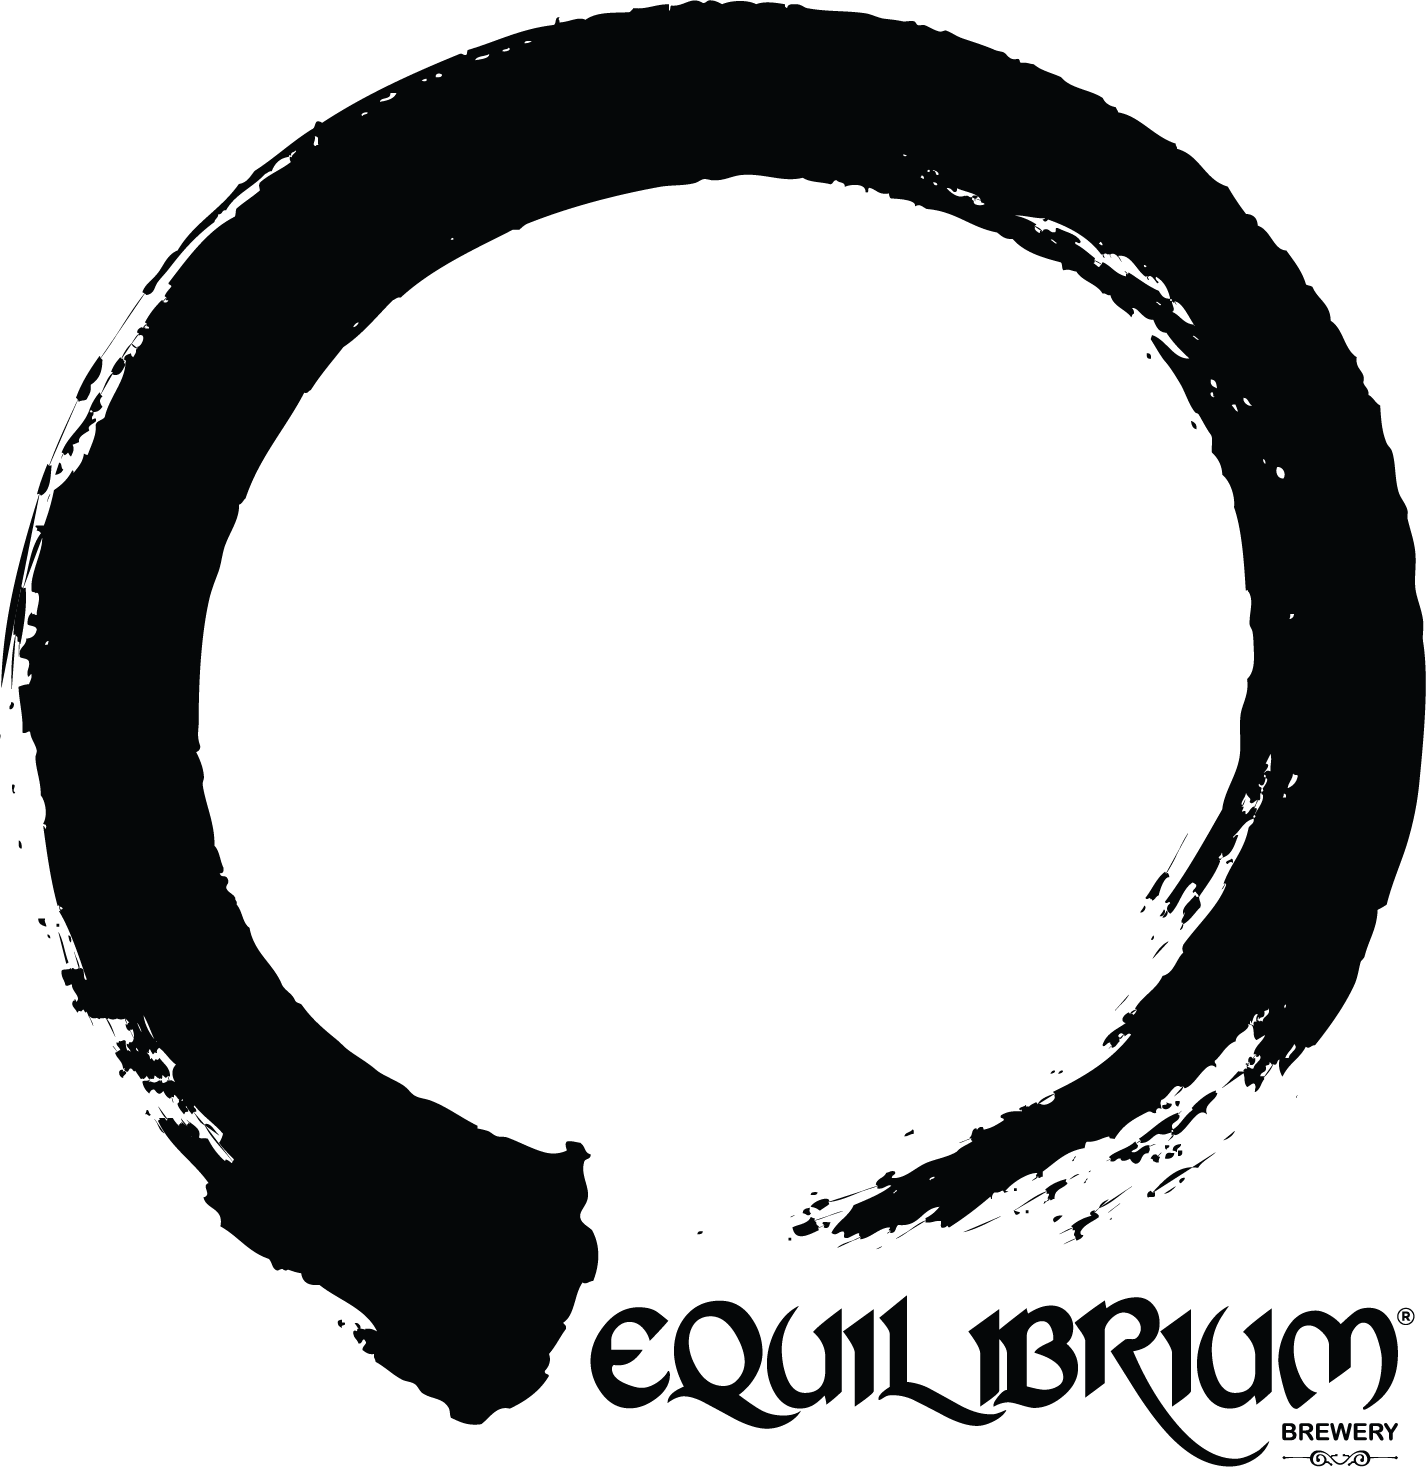 Equilibrium Brewery Logo